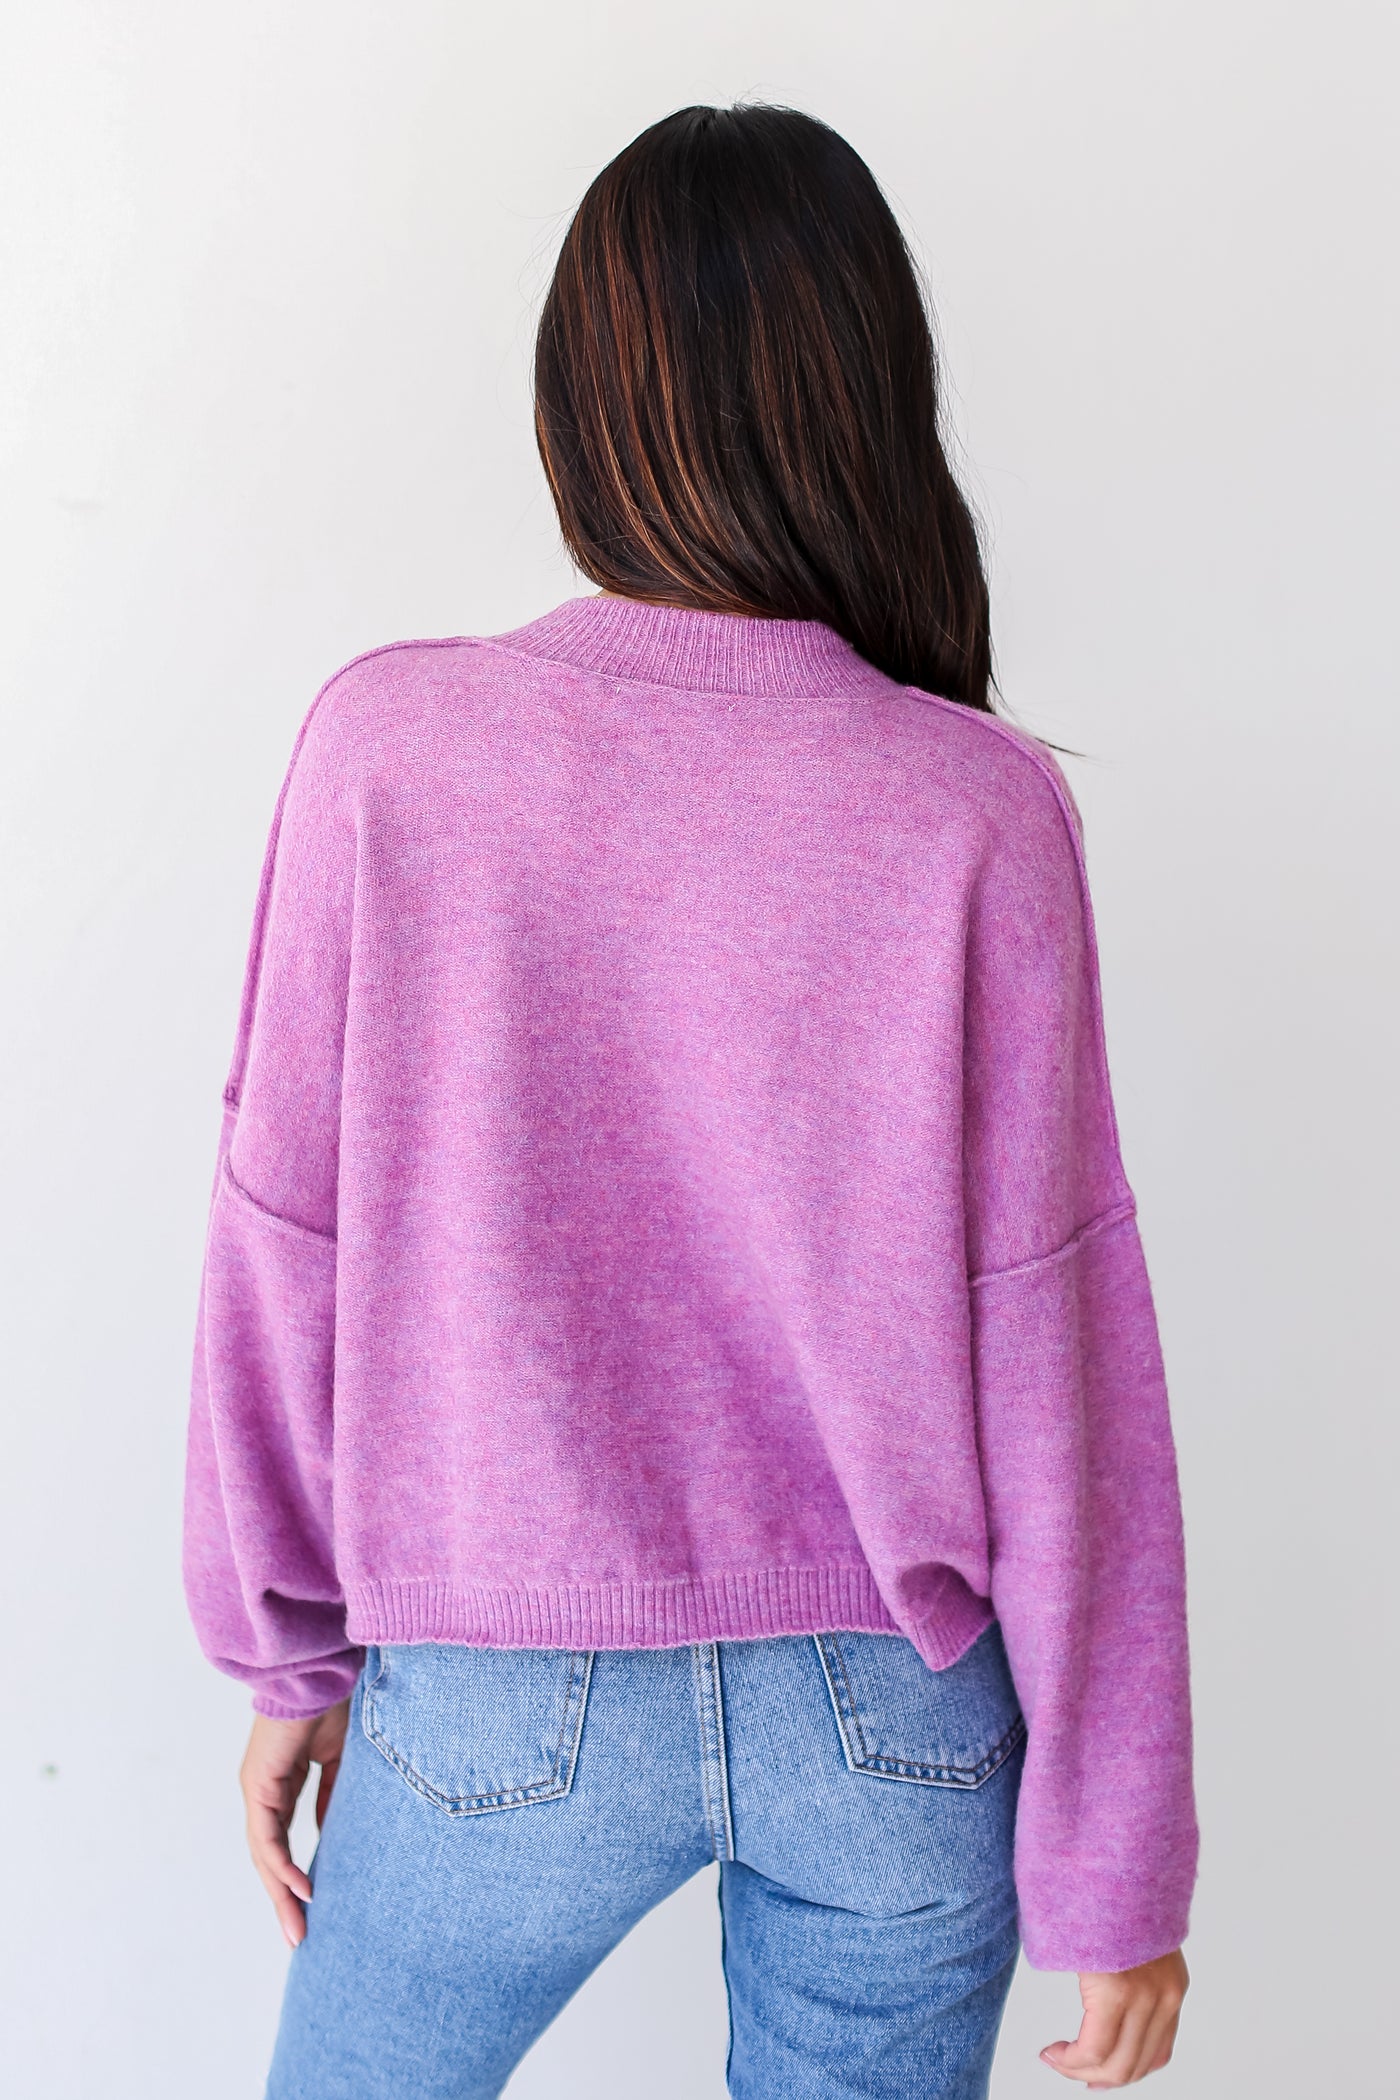 cute purple Sweater back view